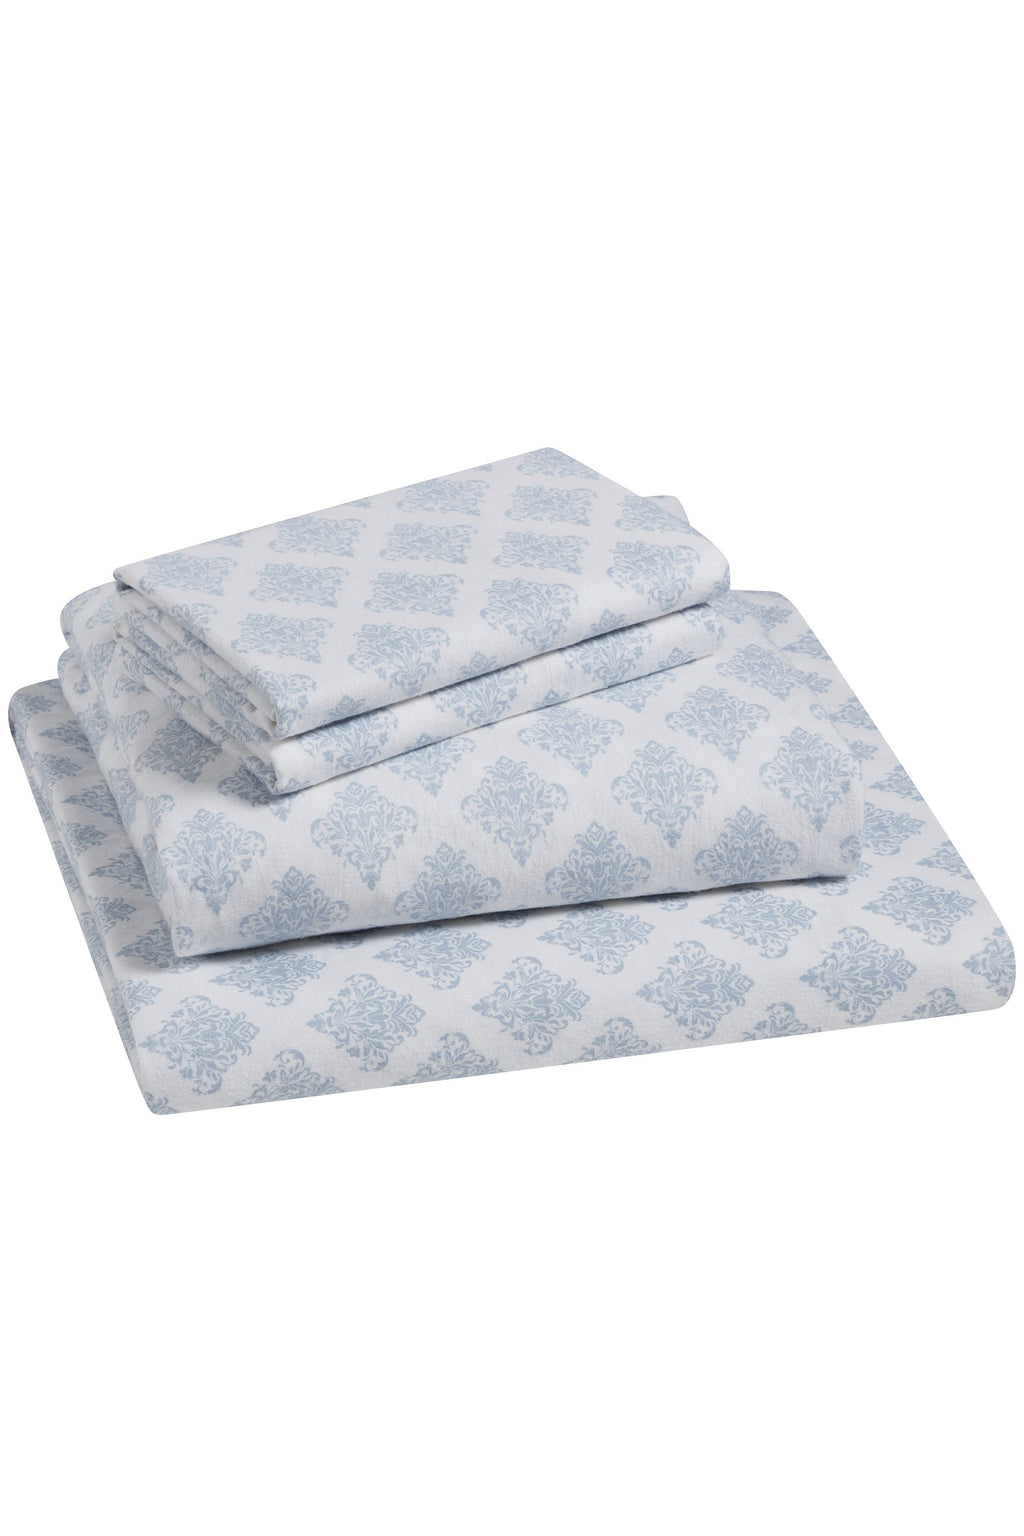 Northern Nights Egyptian Cotton 2-pc Bath Sheet Towel Set 